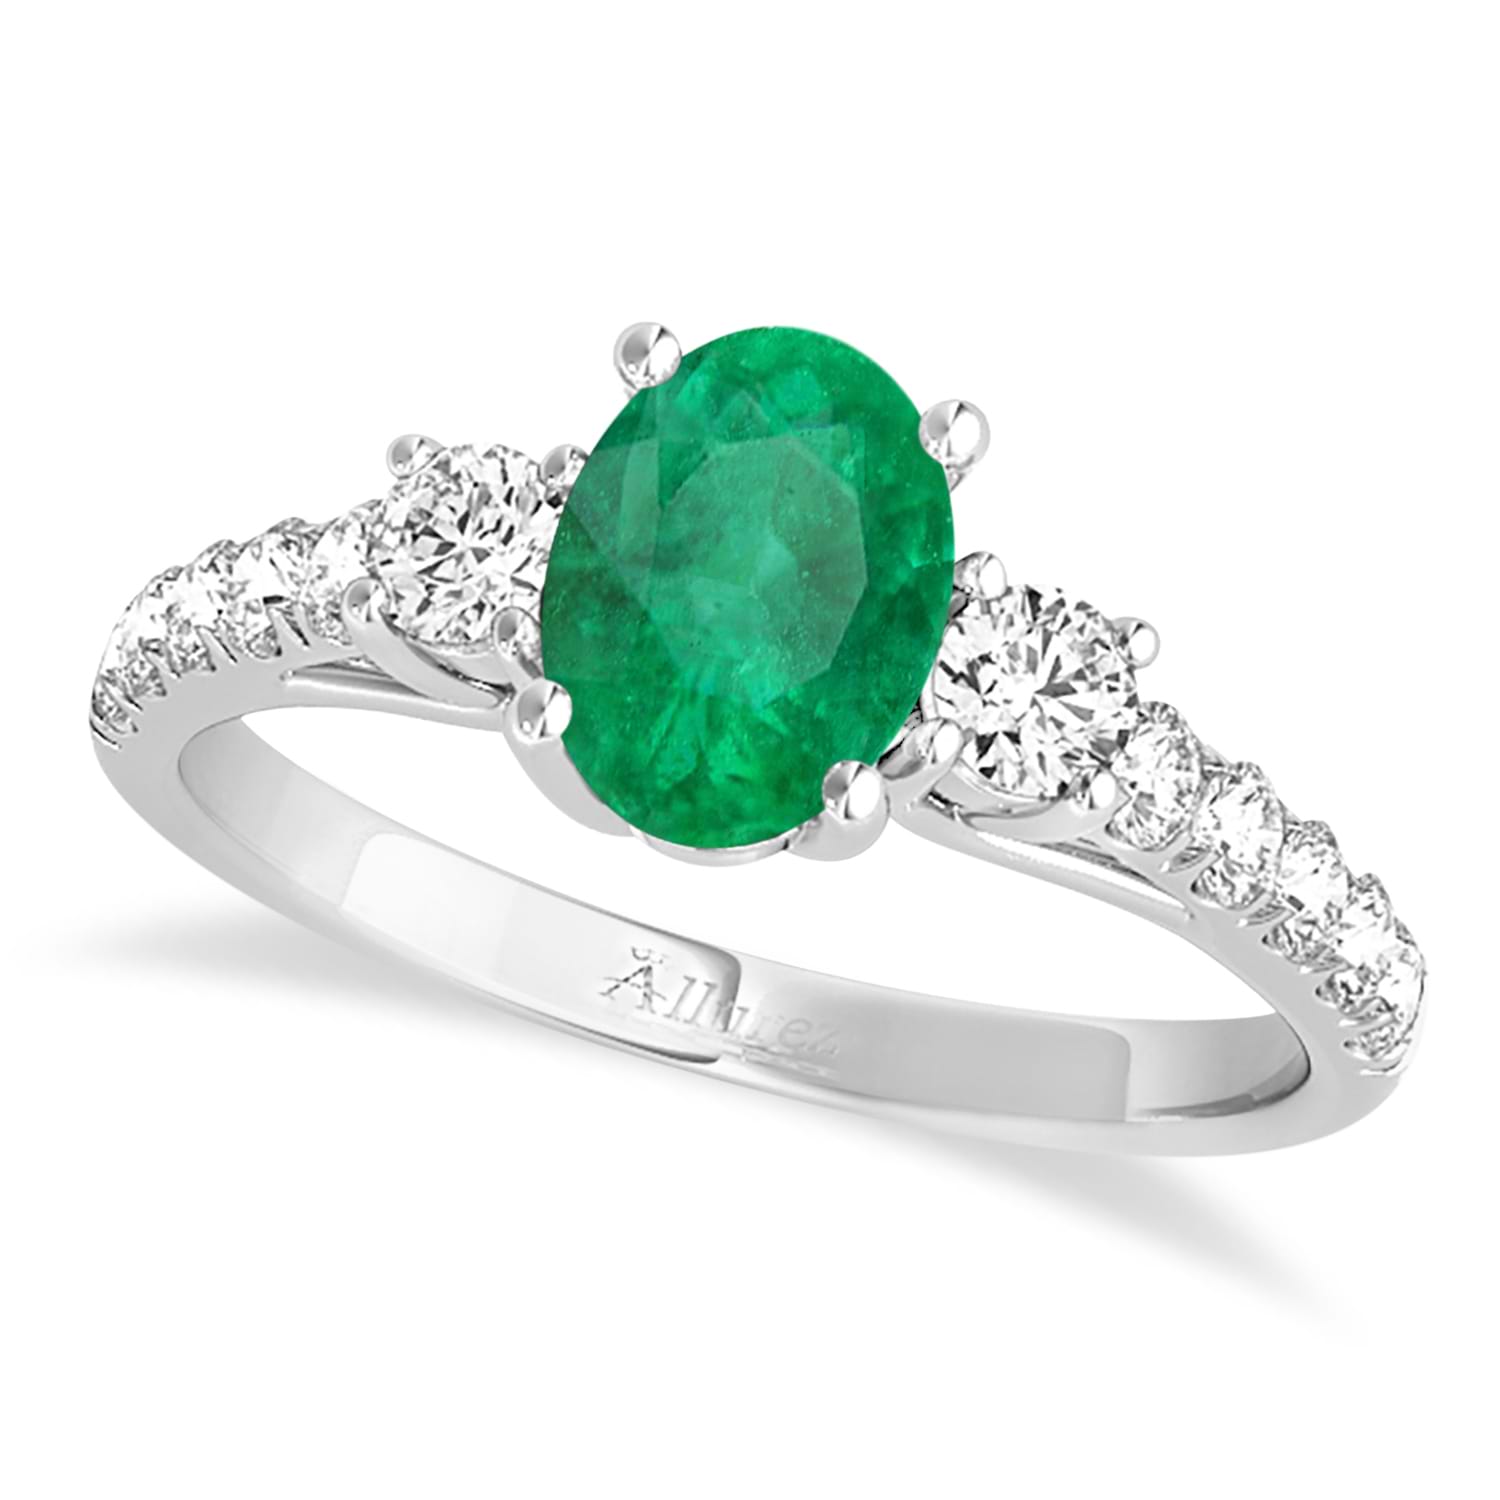 Oval Cut Emerald & Diamond Engagement Ring Palladium (1.40ct)